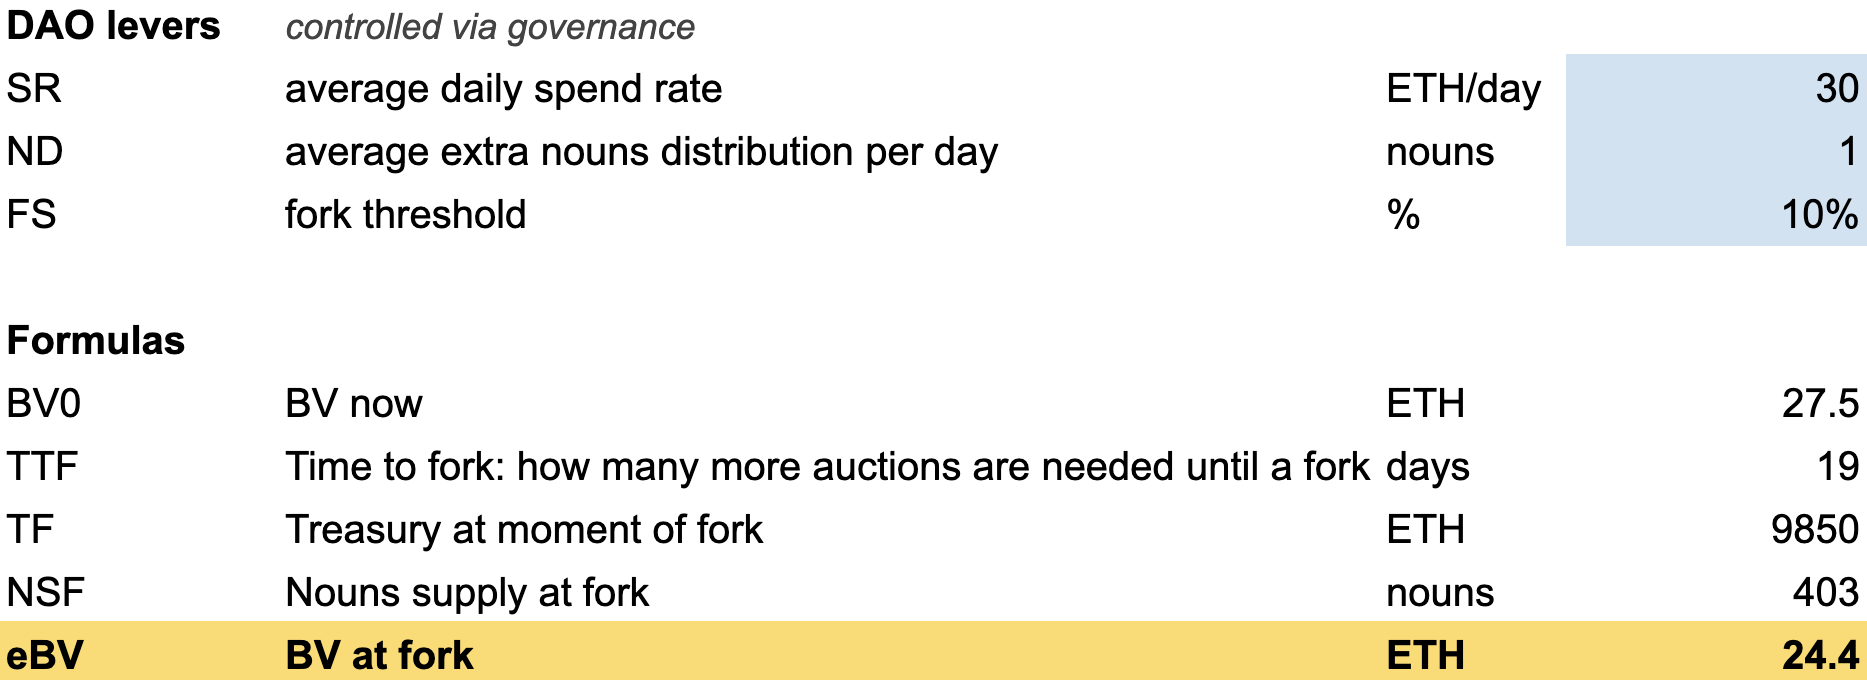 10% Fork Threshold, 1 nouns distribution per day